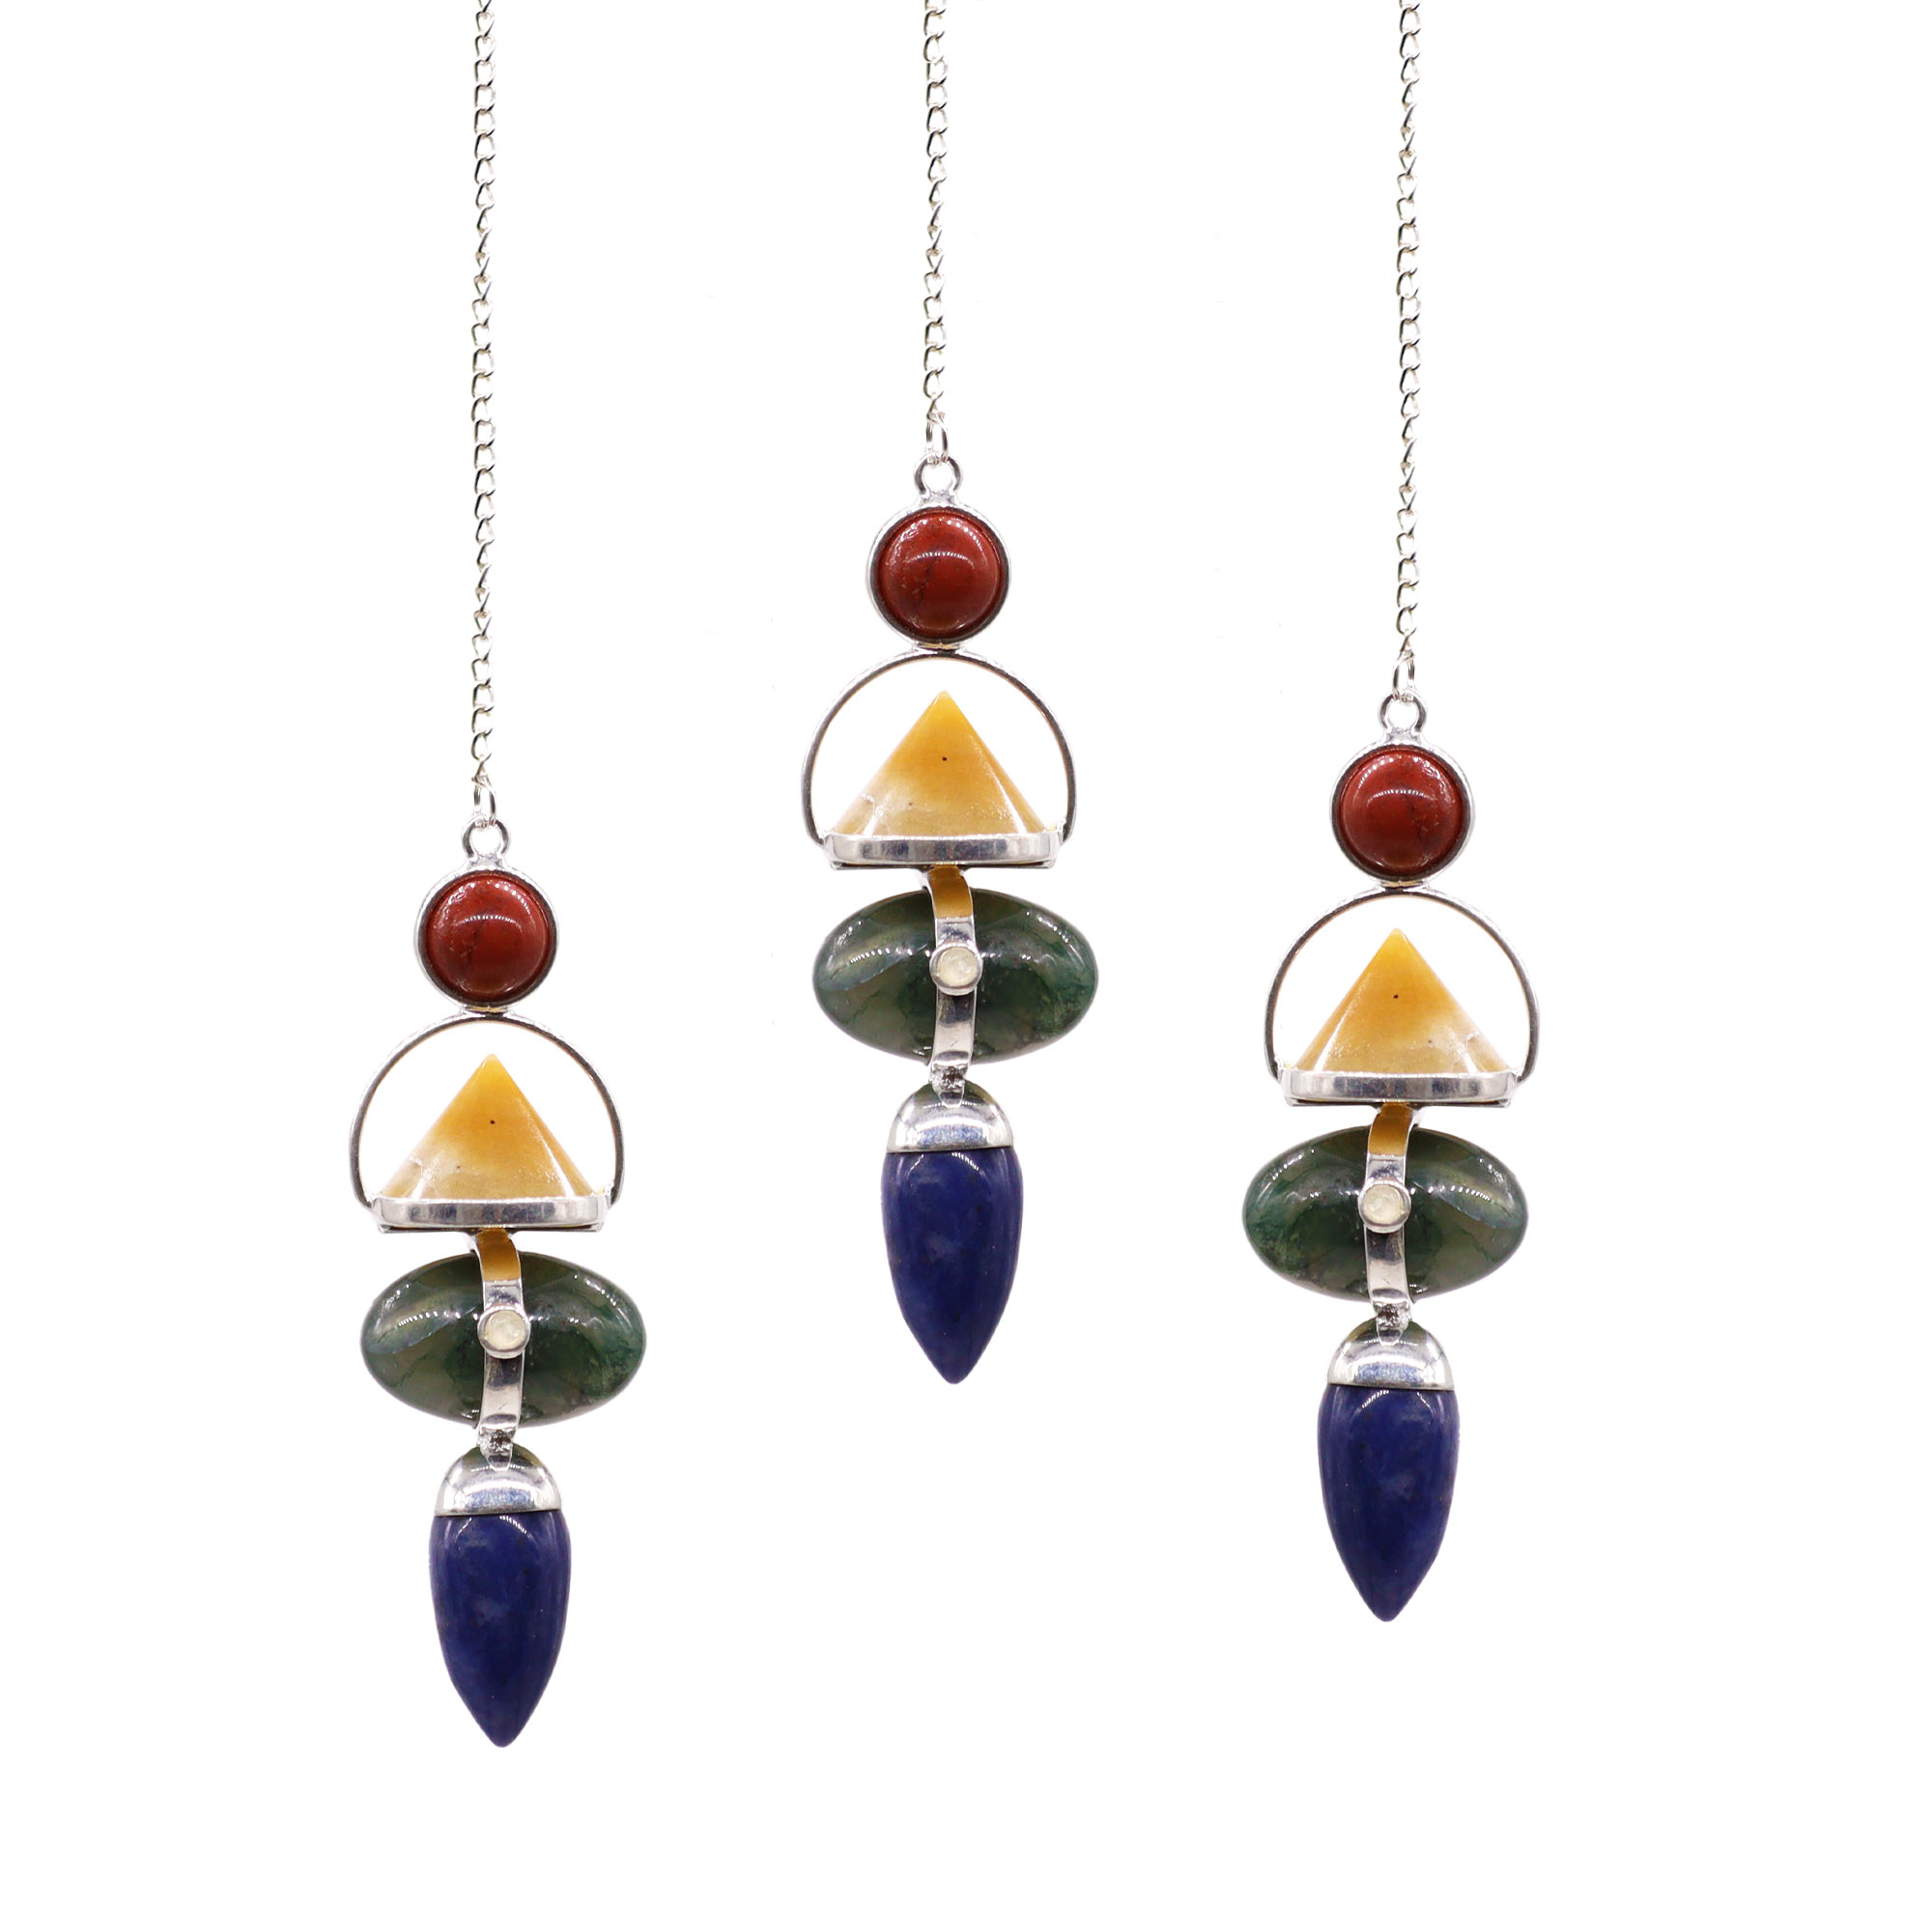 Four Elements Gemstone Pendulum - Red Jasper, Yellow Adventurine, Moss Agate, Sodalite & Moonstone